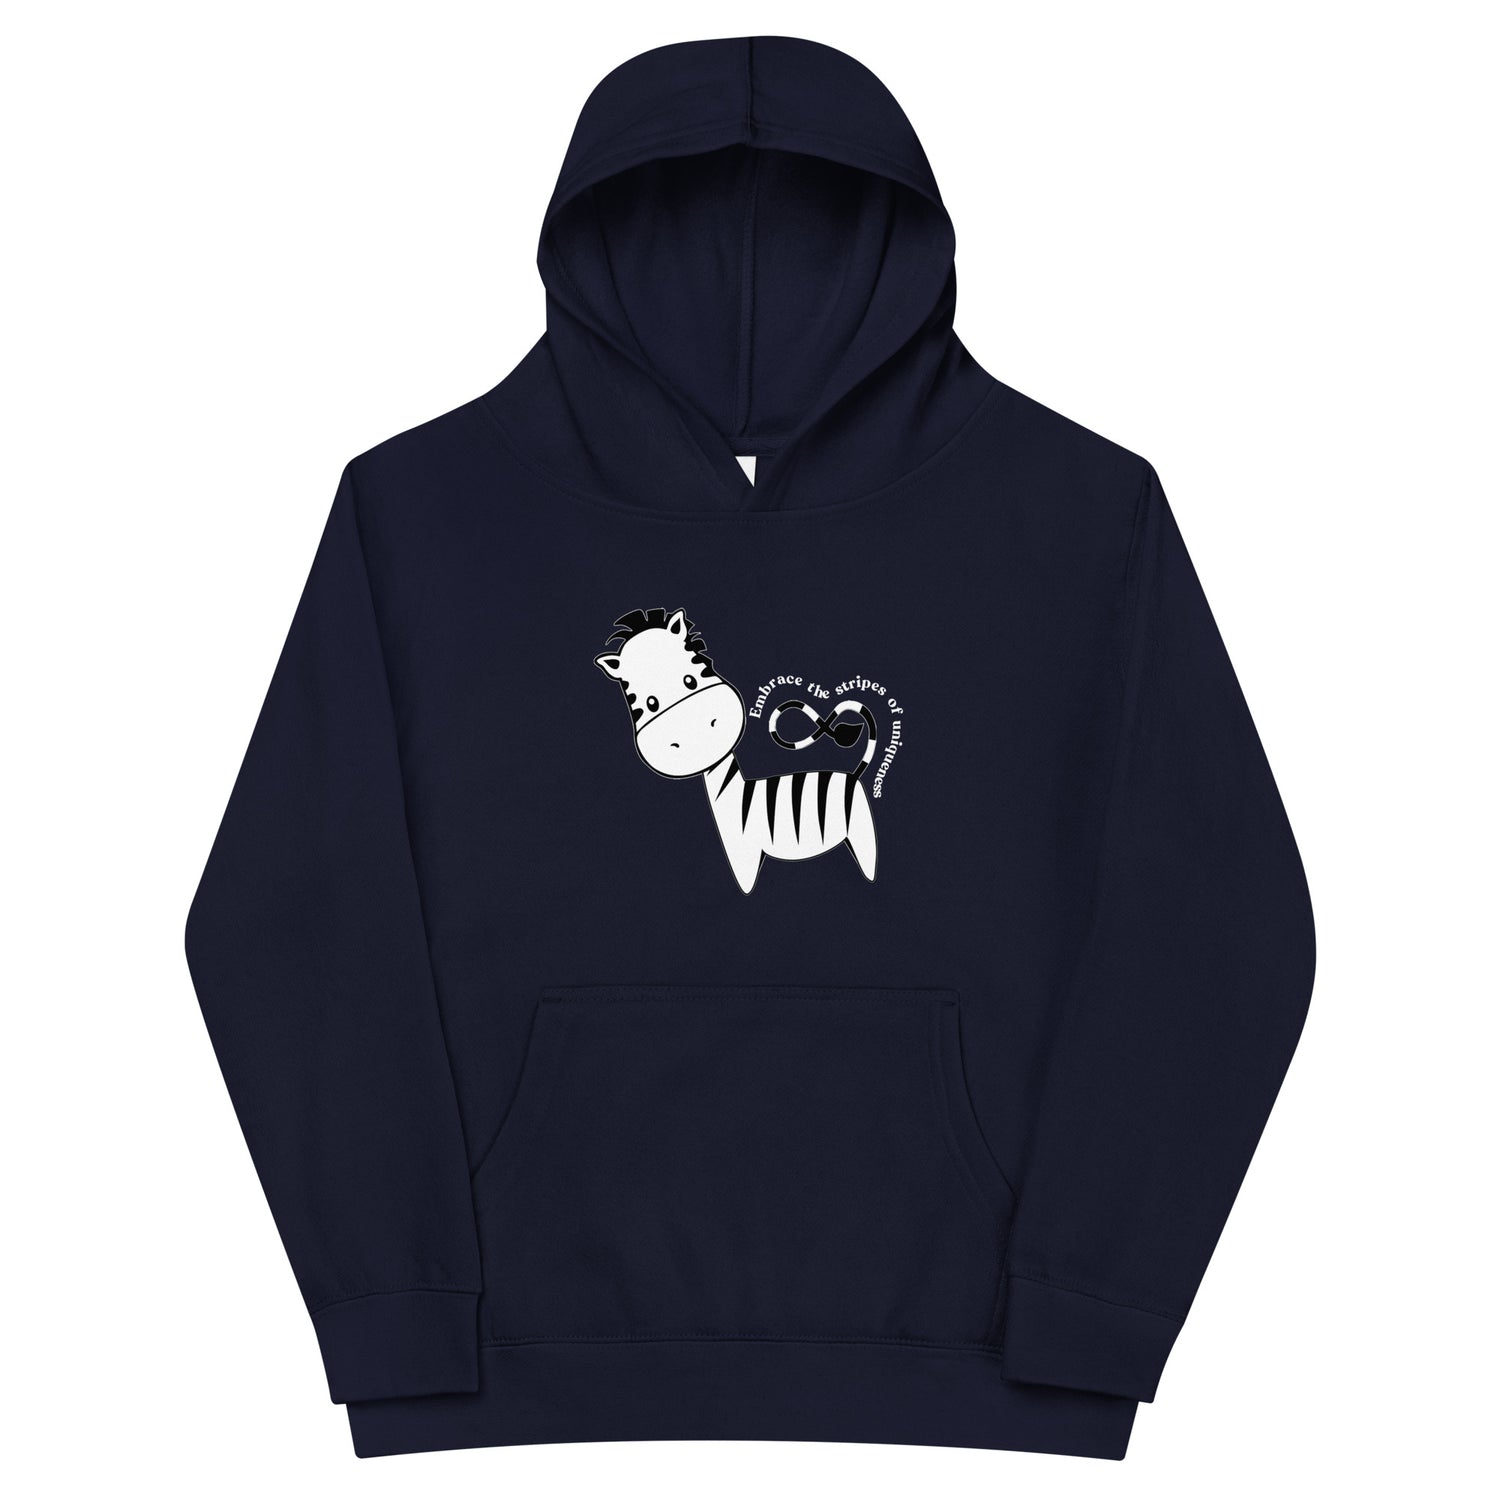 Indigo Kidswear hoodie featuring a zebra print design with pockets at front.